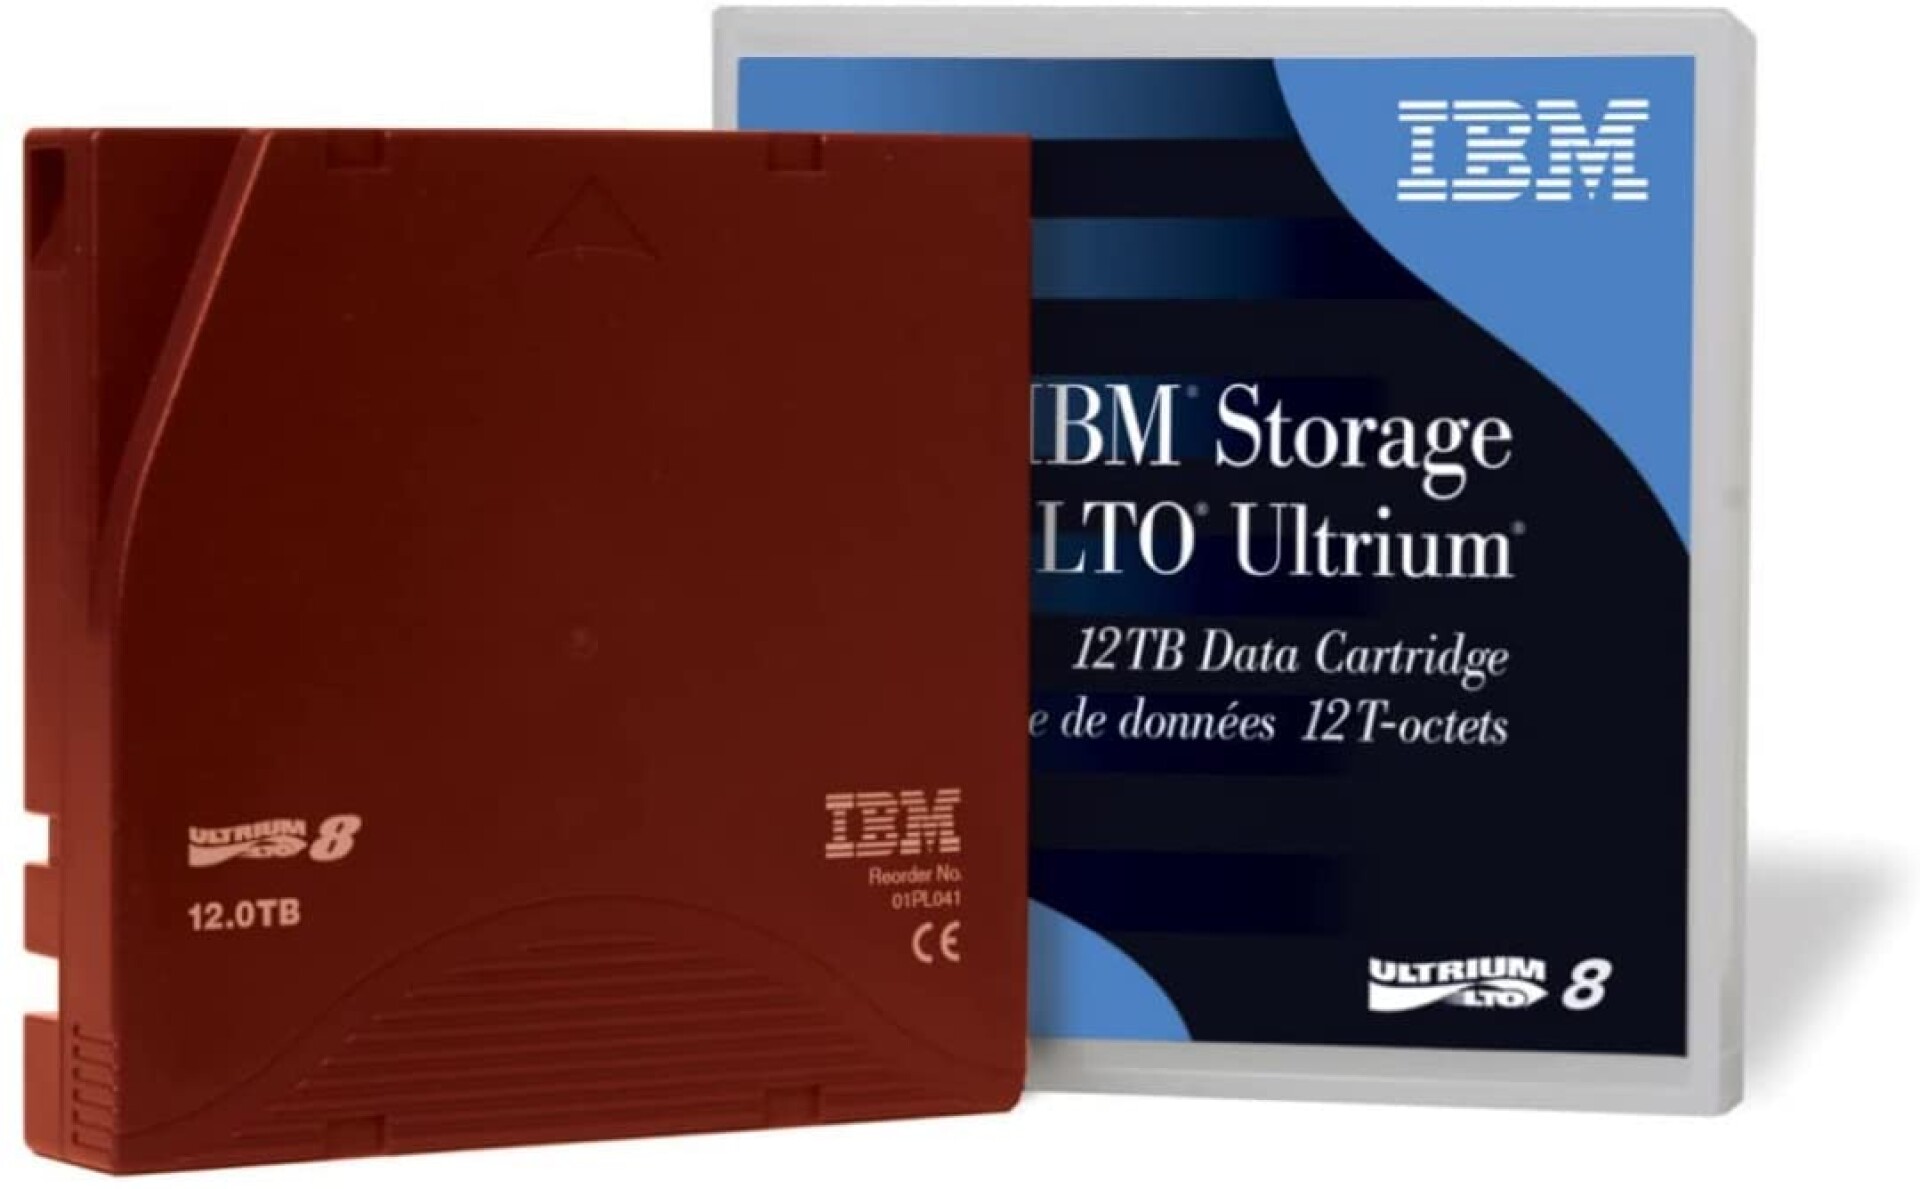 IBM CINTA ULTRIUM LTO 8 01PL041 12/30TB - 2258 